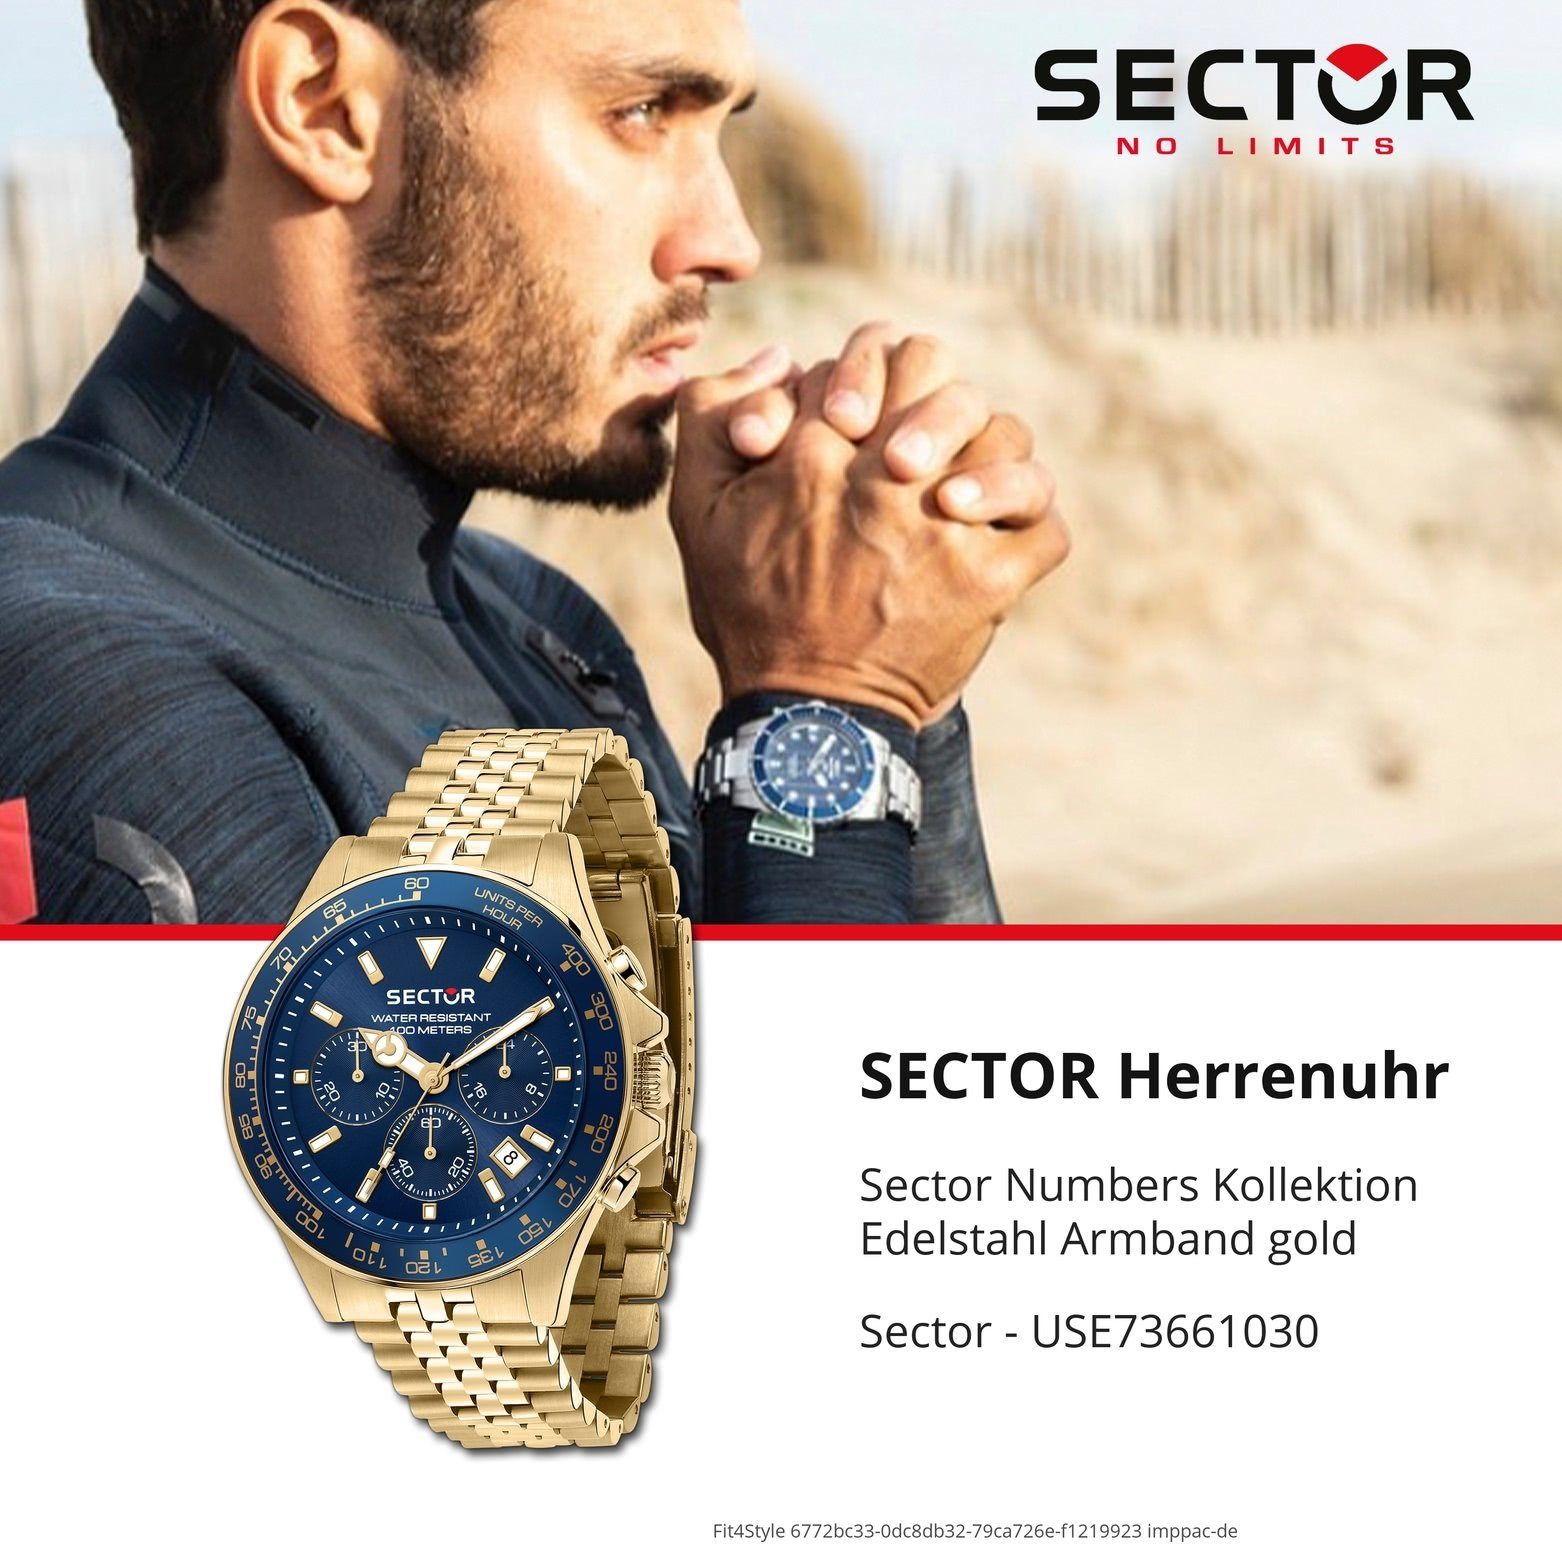 rund, Sector Chronograph Herren gold, Armbanduhr groß Herren (43mm), Armbanduhr Chrono, Fashion Sector Edelstahlarmband